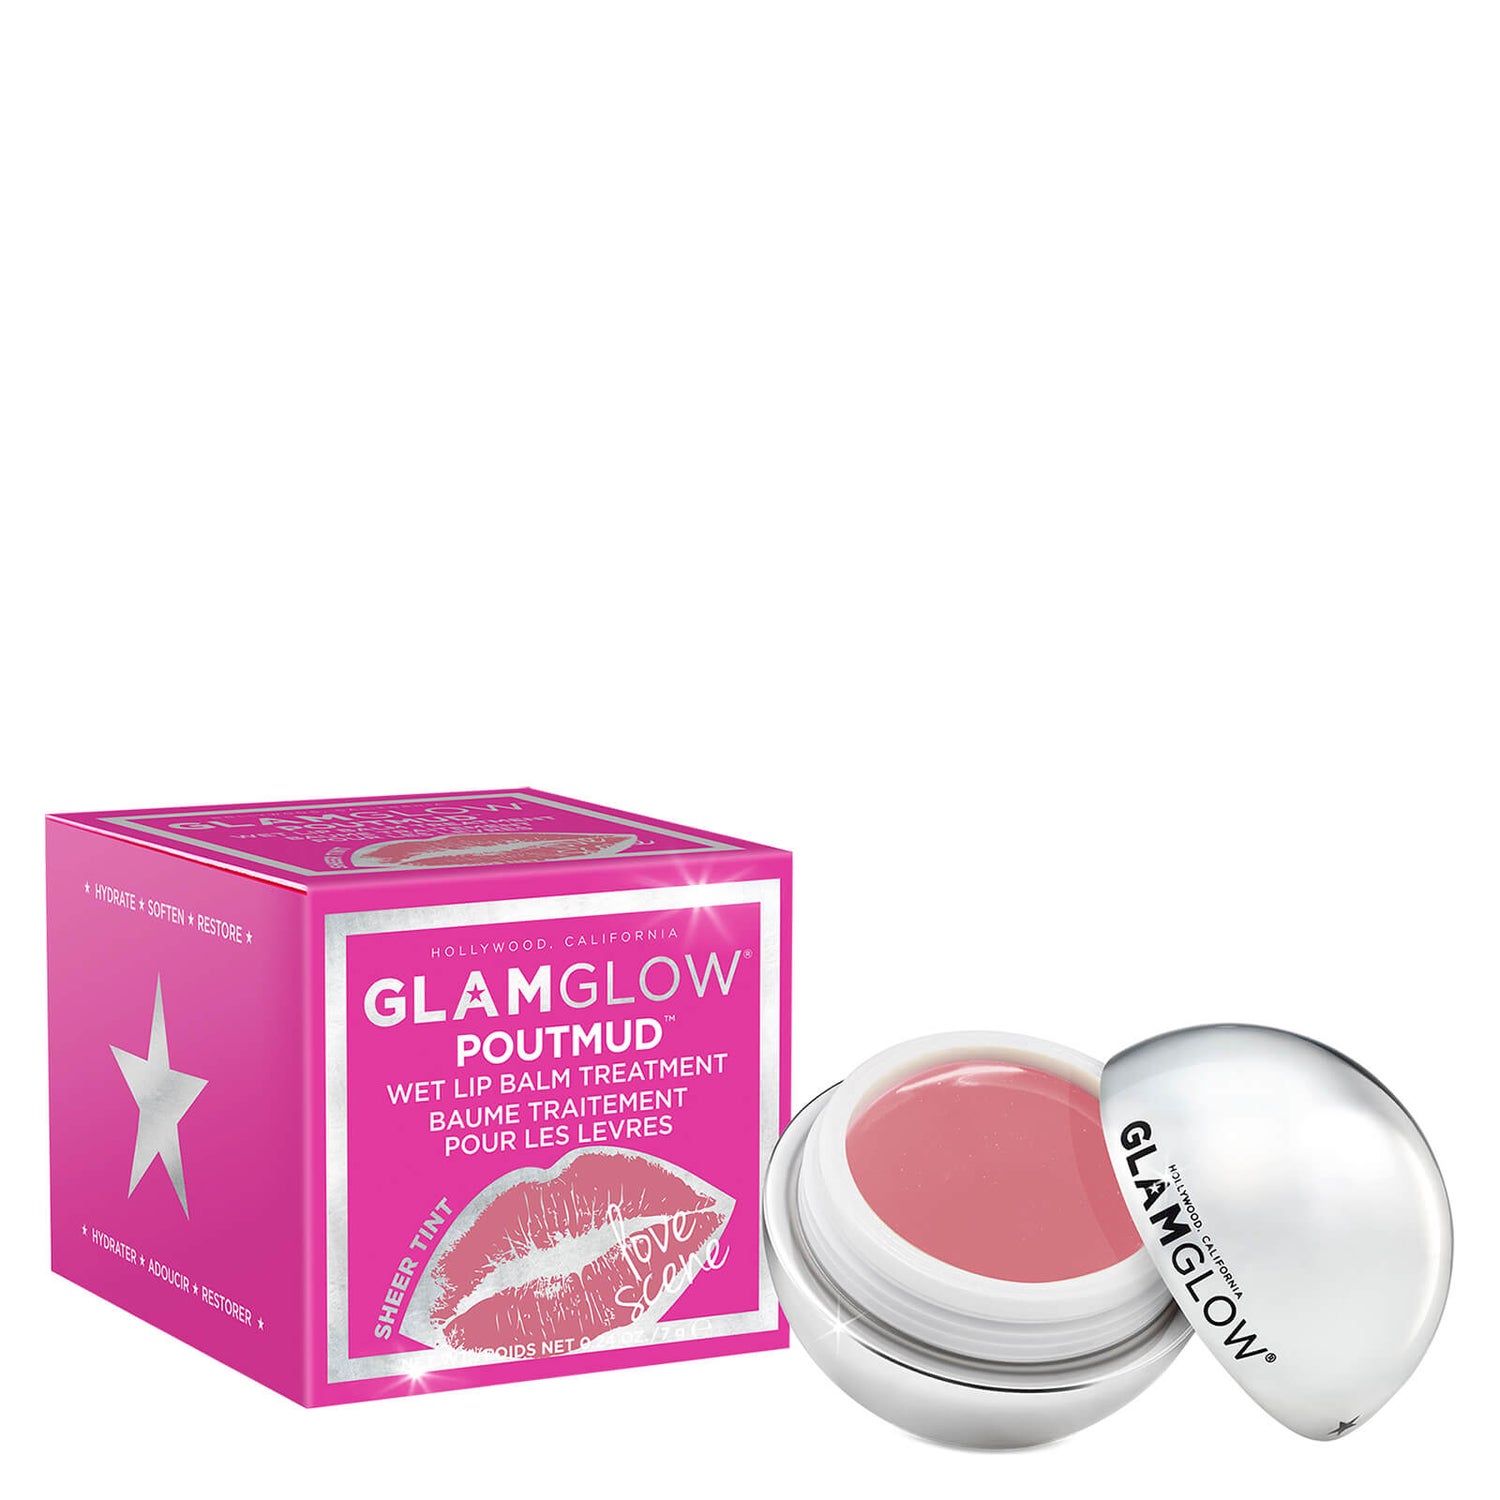 GLAMGLOW Poutmud Wet Lip Balm Treatment Mini - Love Scene